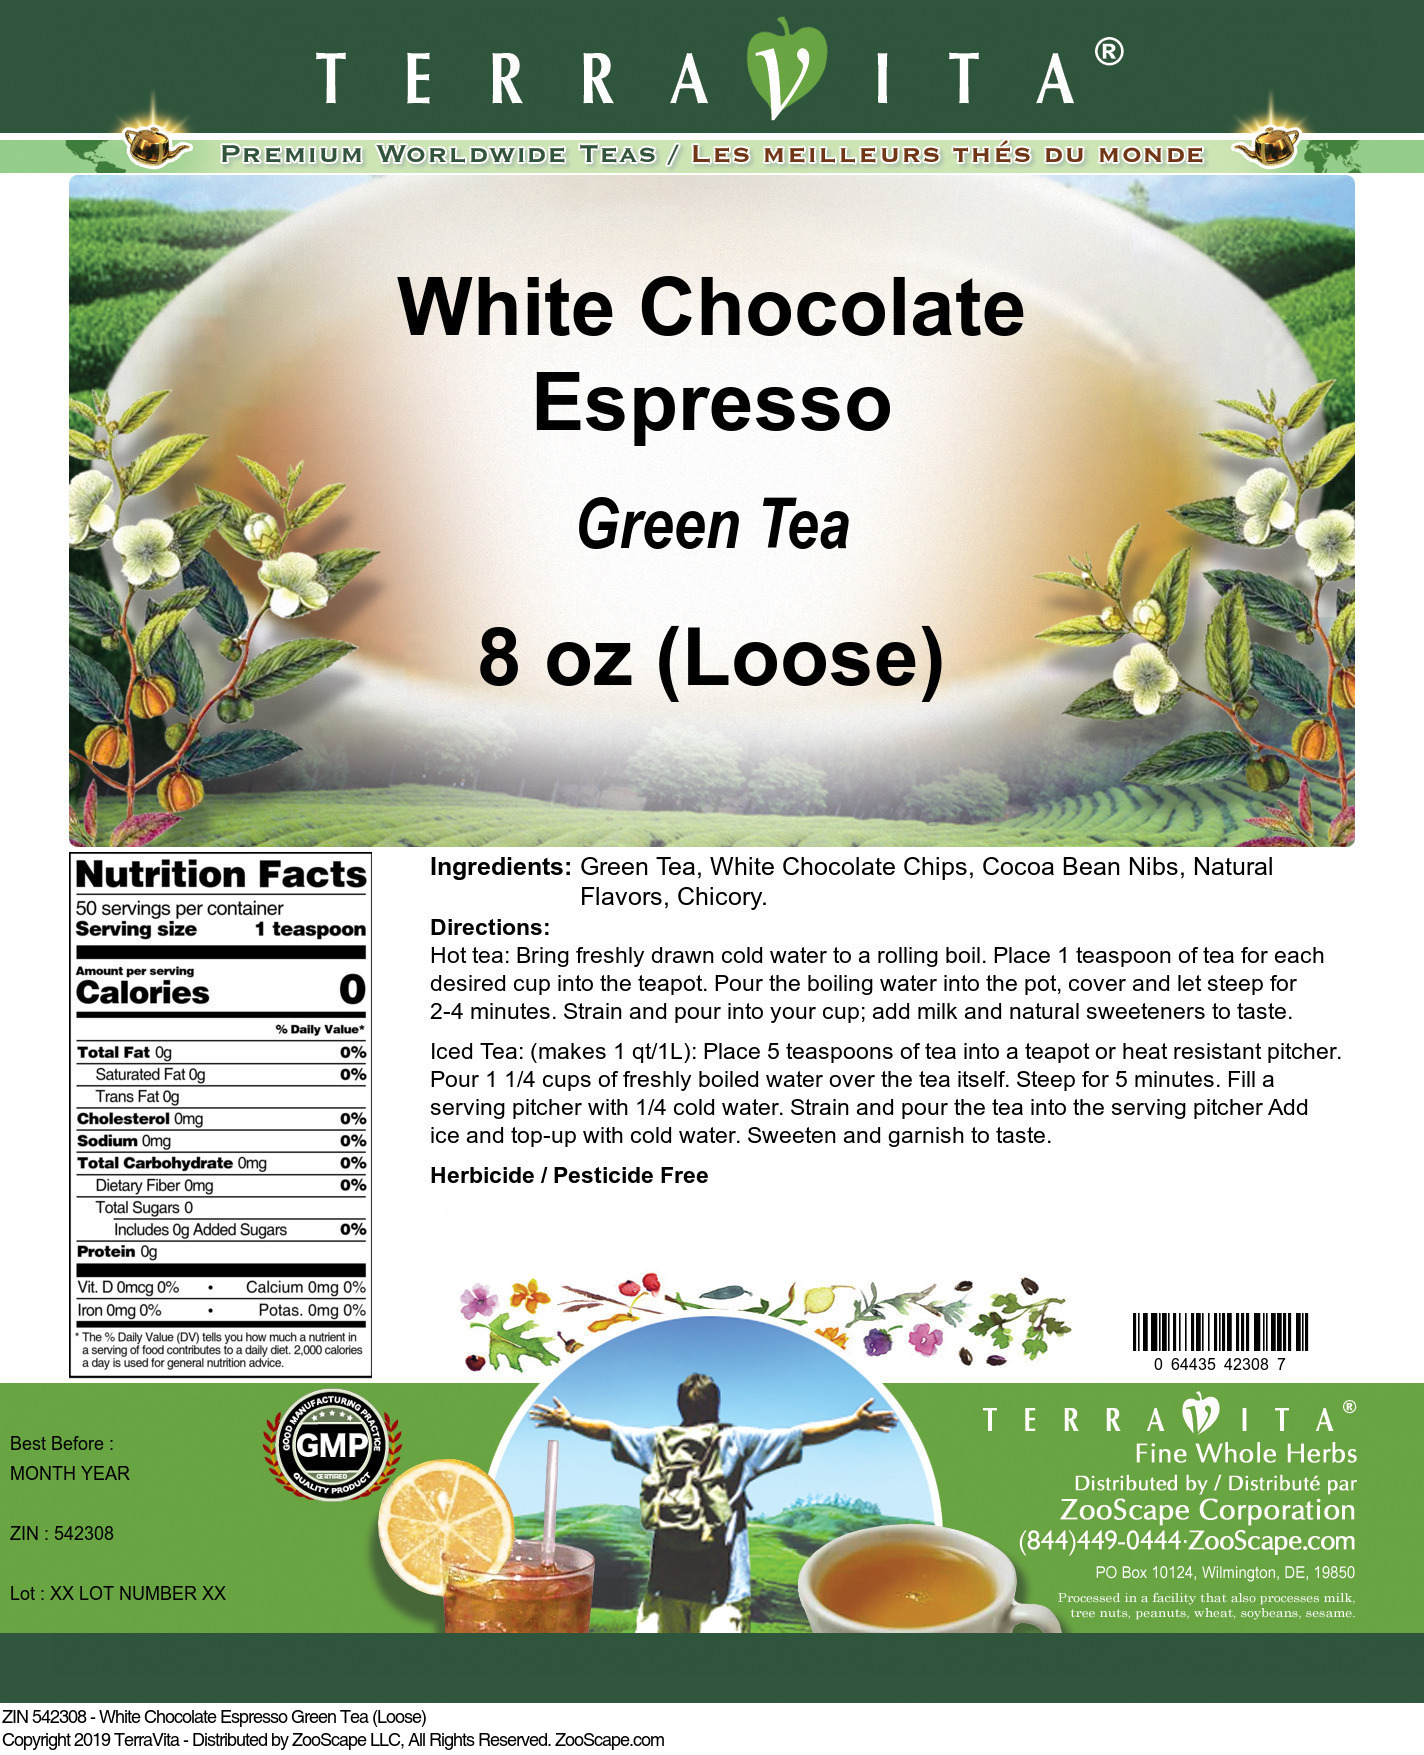 White Chocolate Espresso Green Tea (Loose) - Label